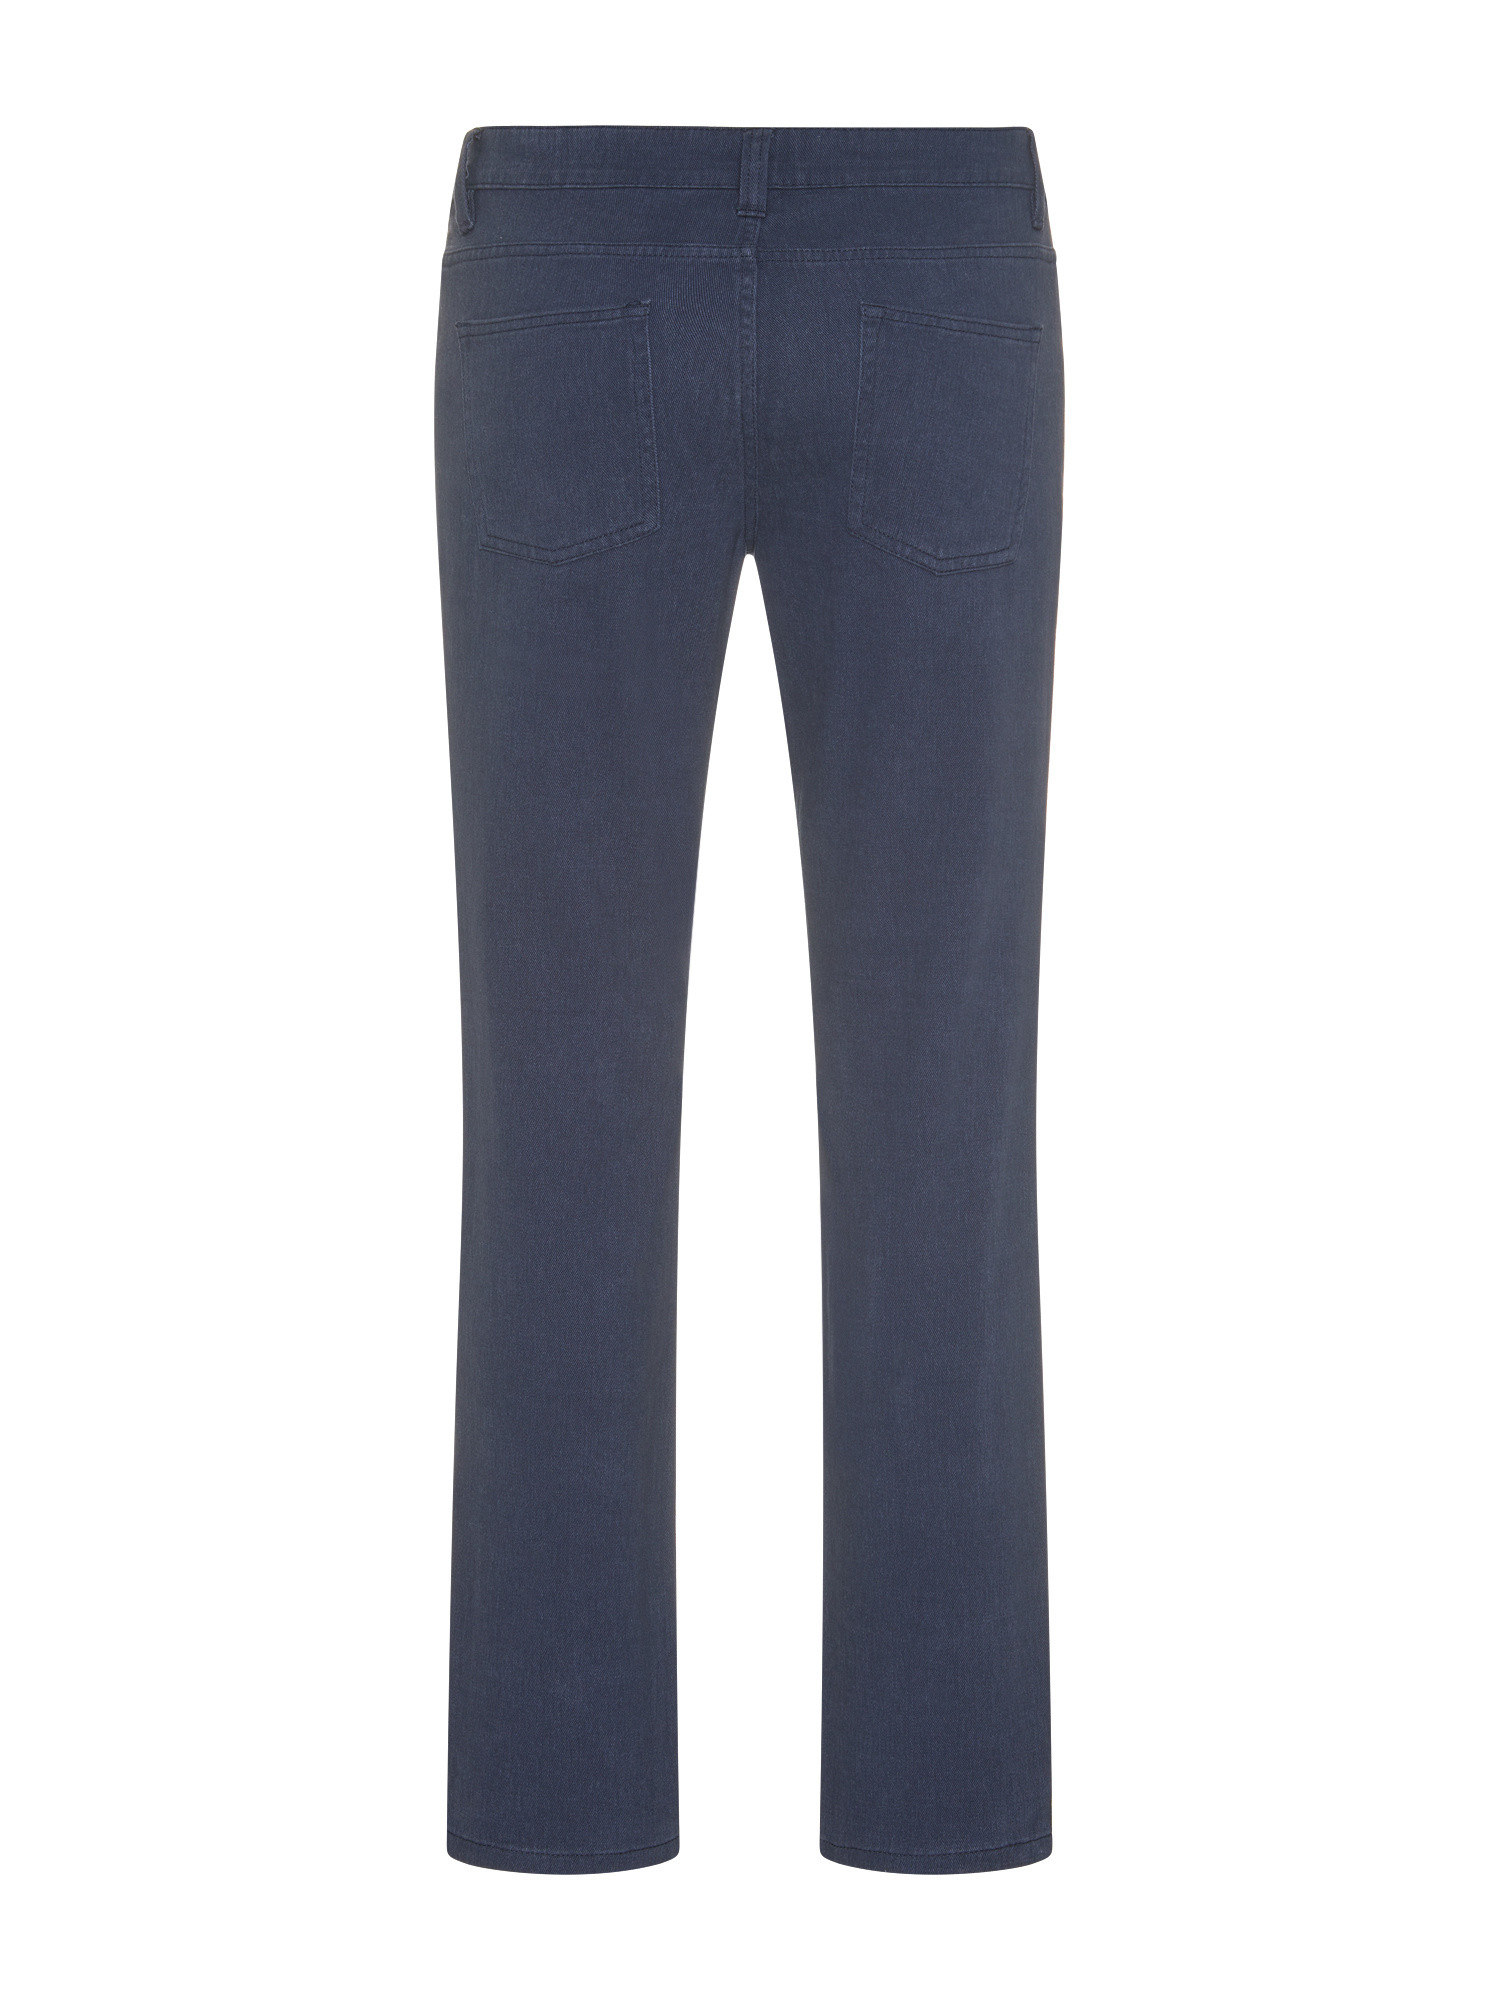 JCT - Pantaloni regular fit cinque tasche in puro cotone, Blu scuro, large image number 1